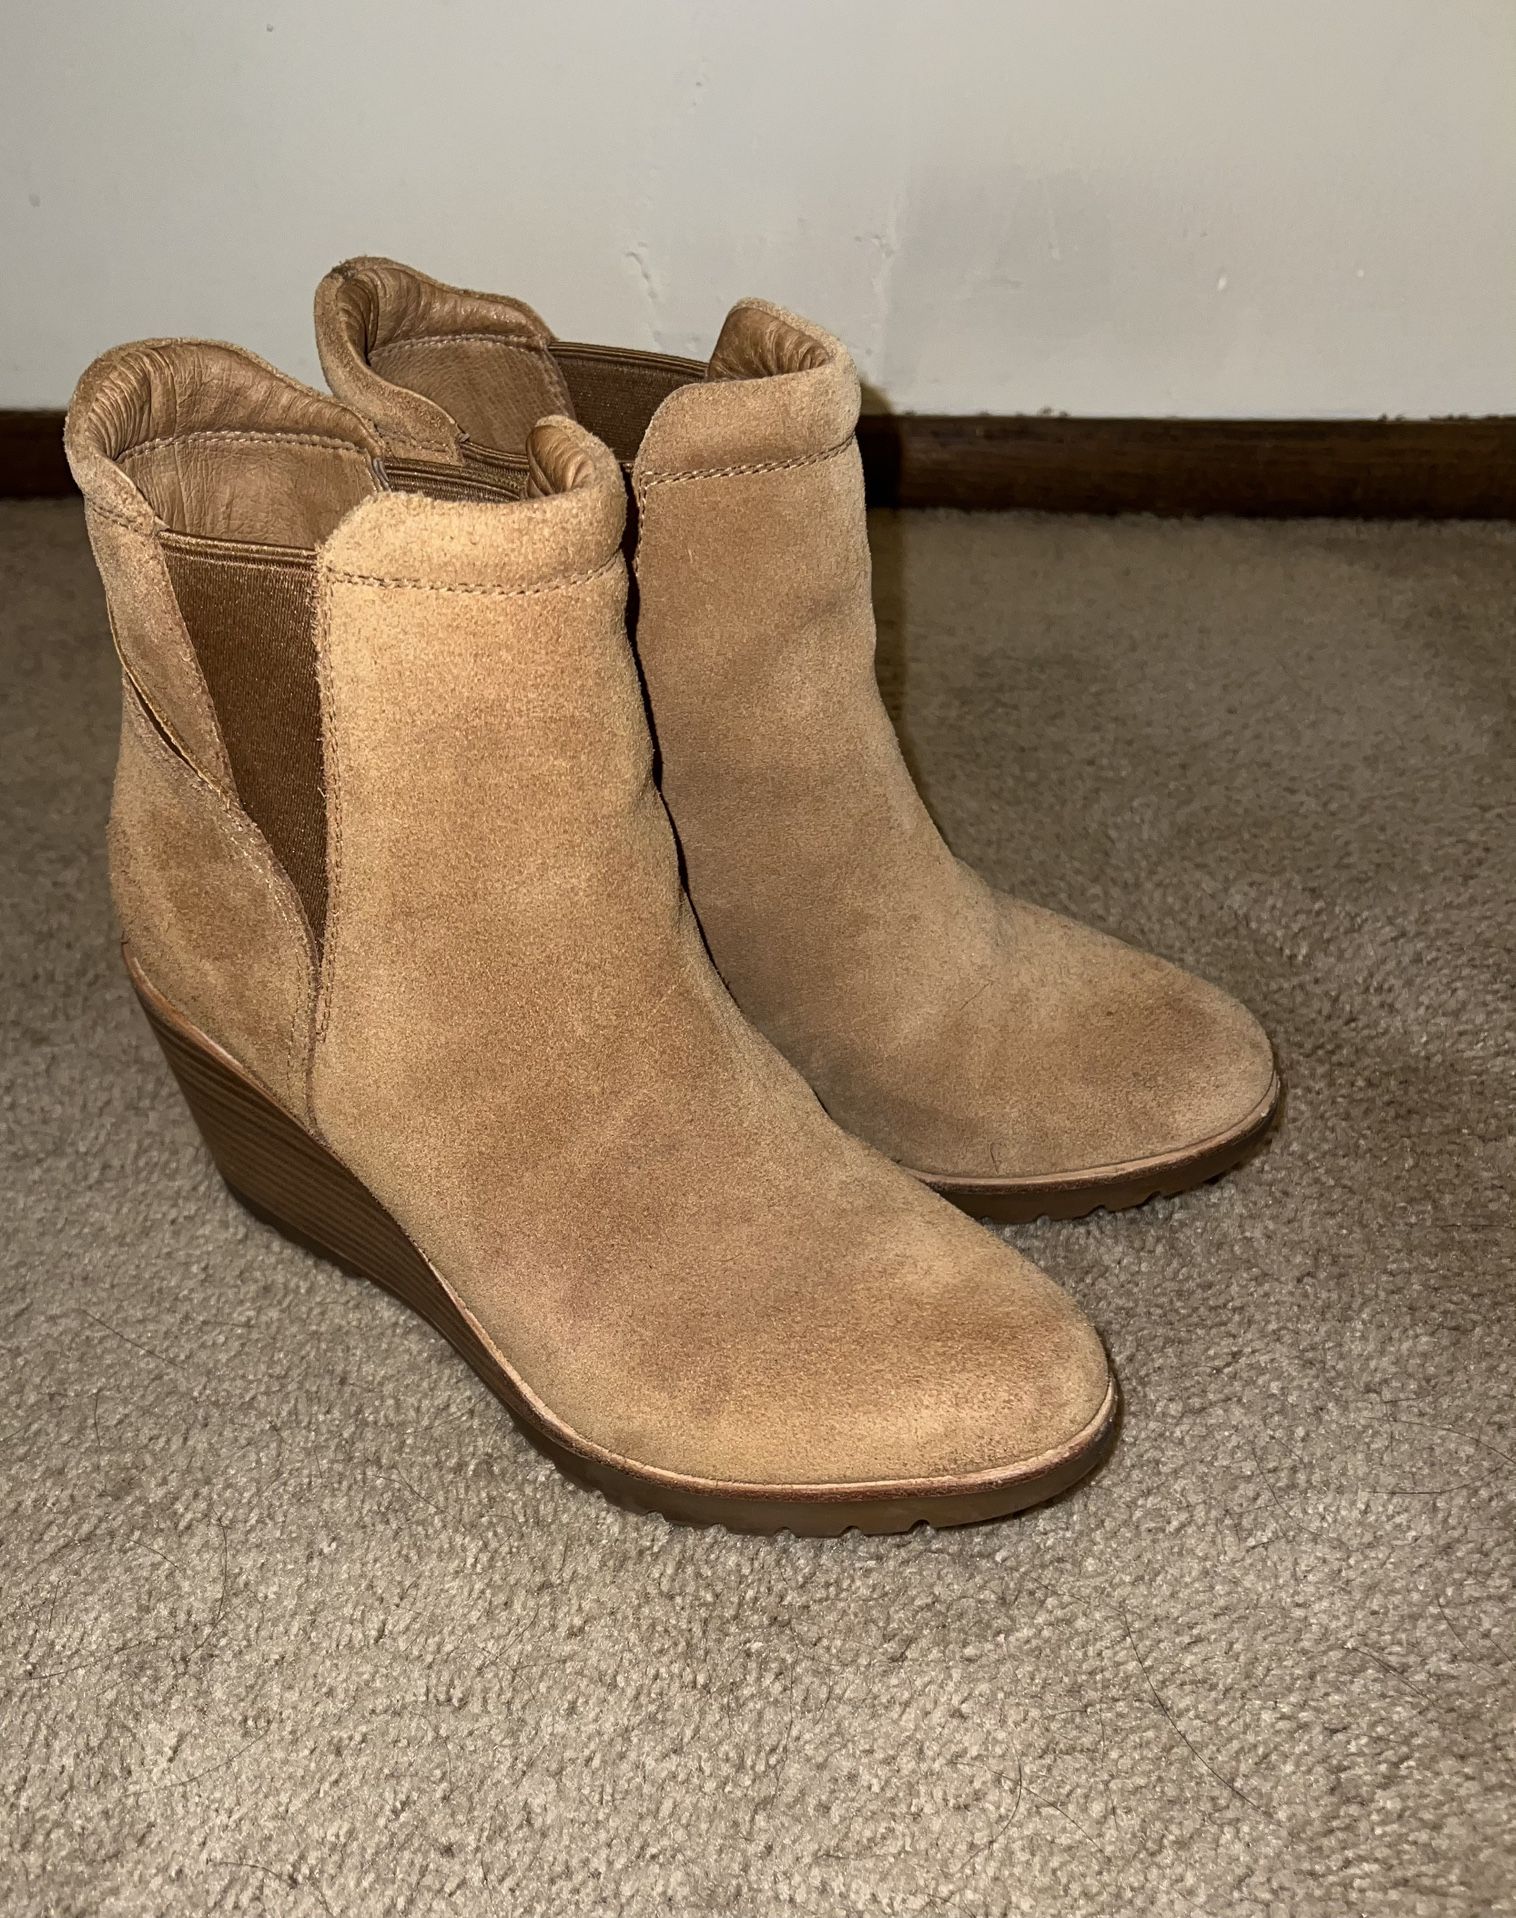 SOREL women’s wedge boot. Size 9.